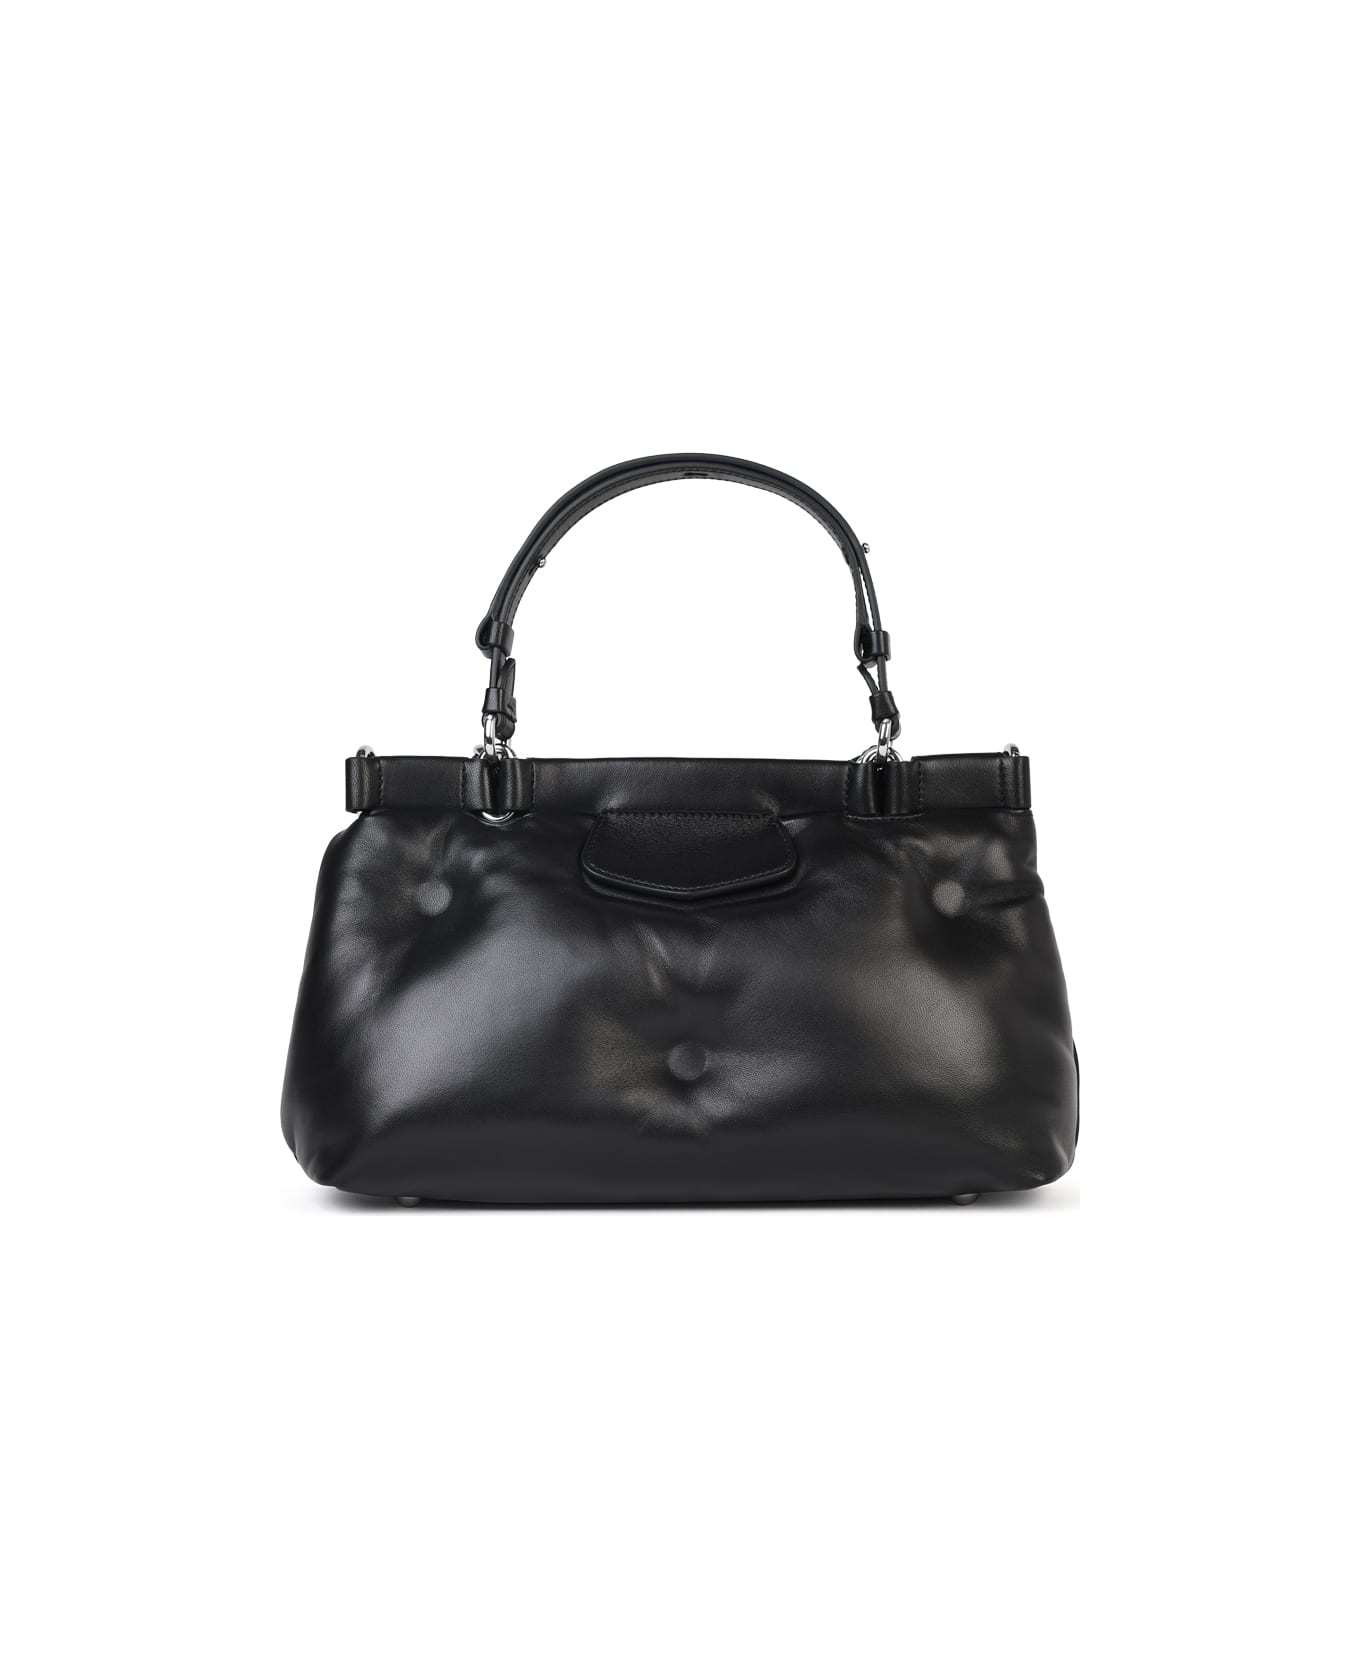 Maison Margiela 'glam Slam' Black Leather Bag - Black トートバッグ